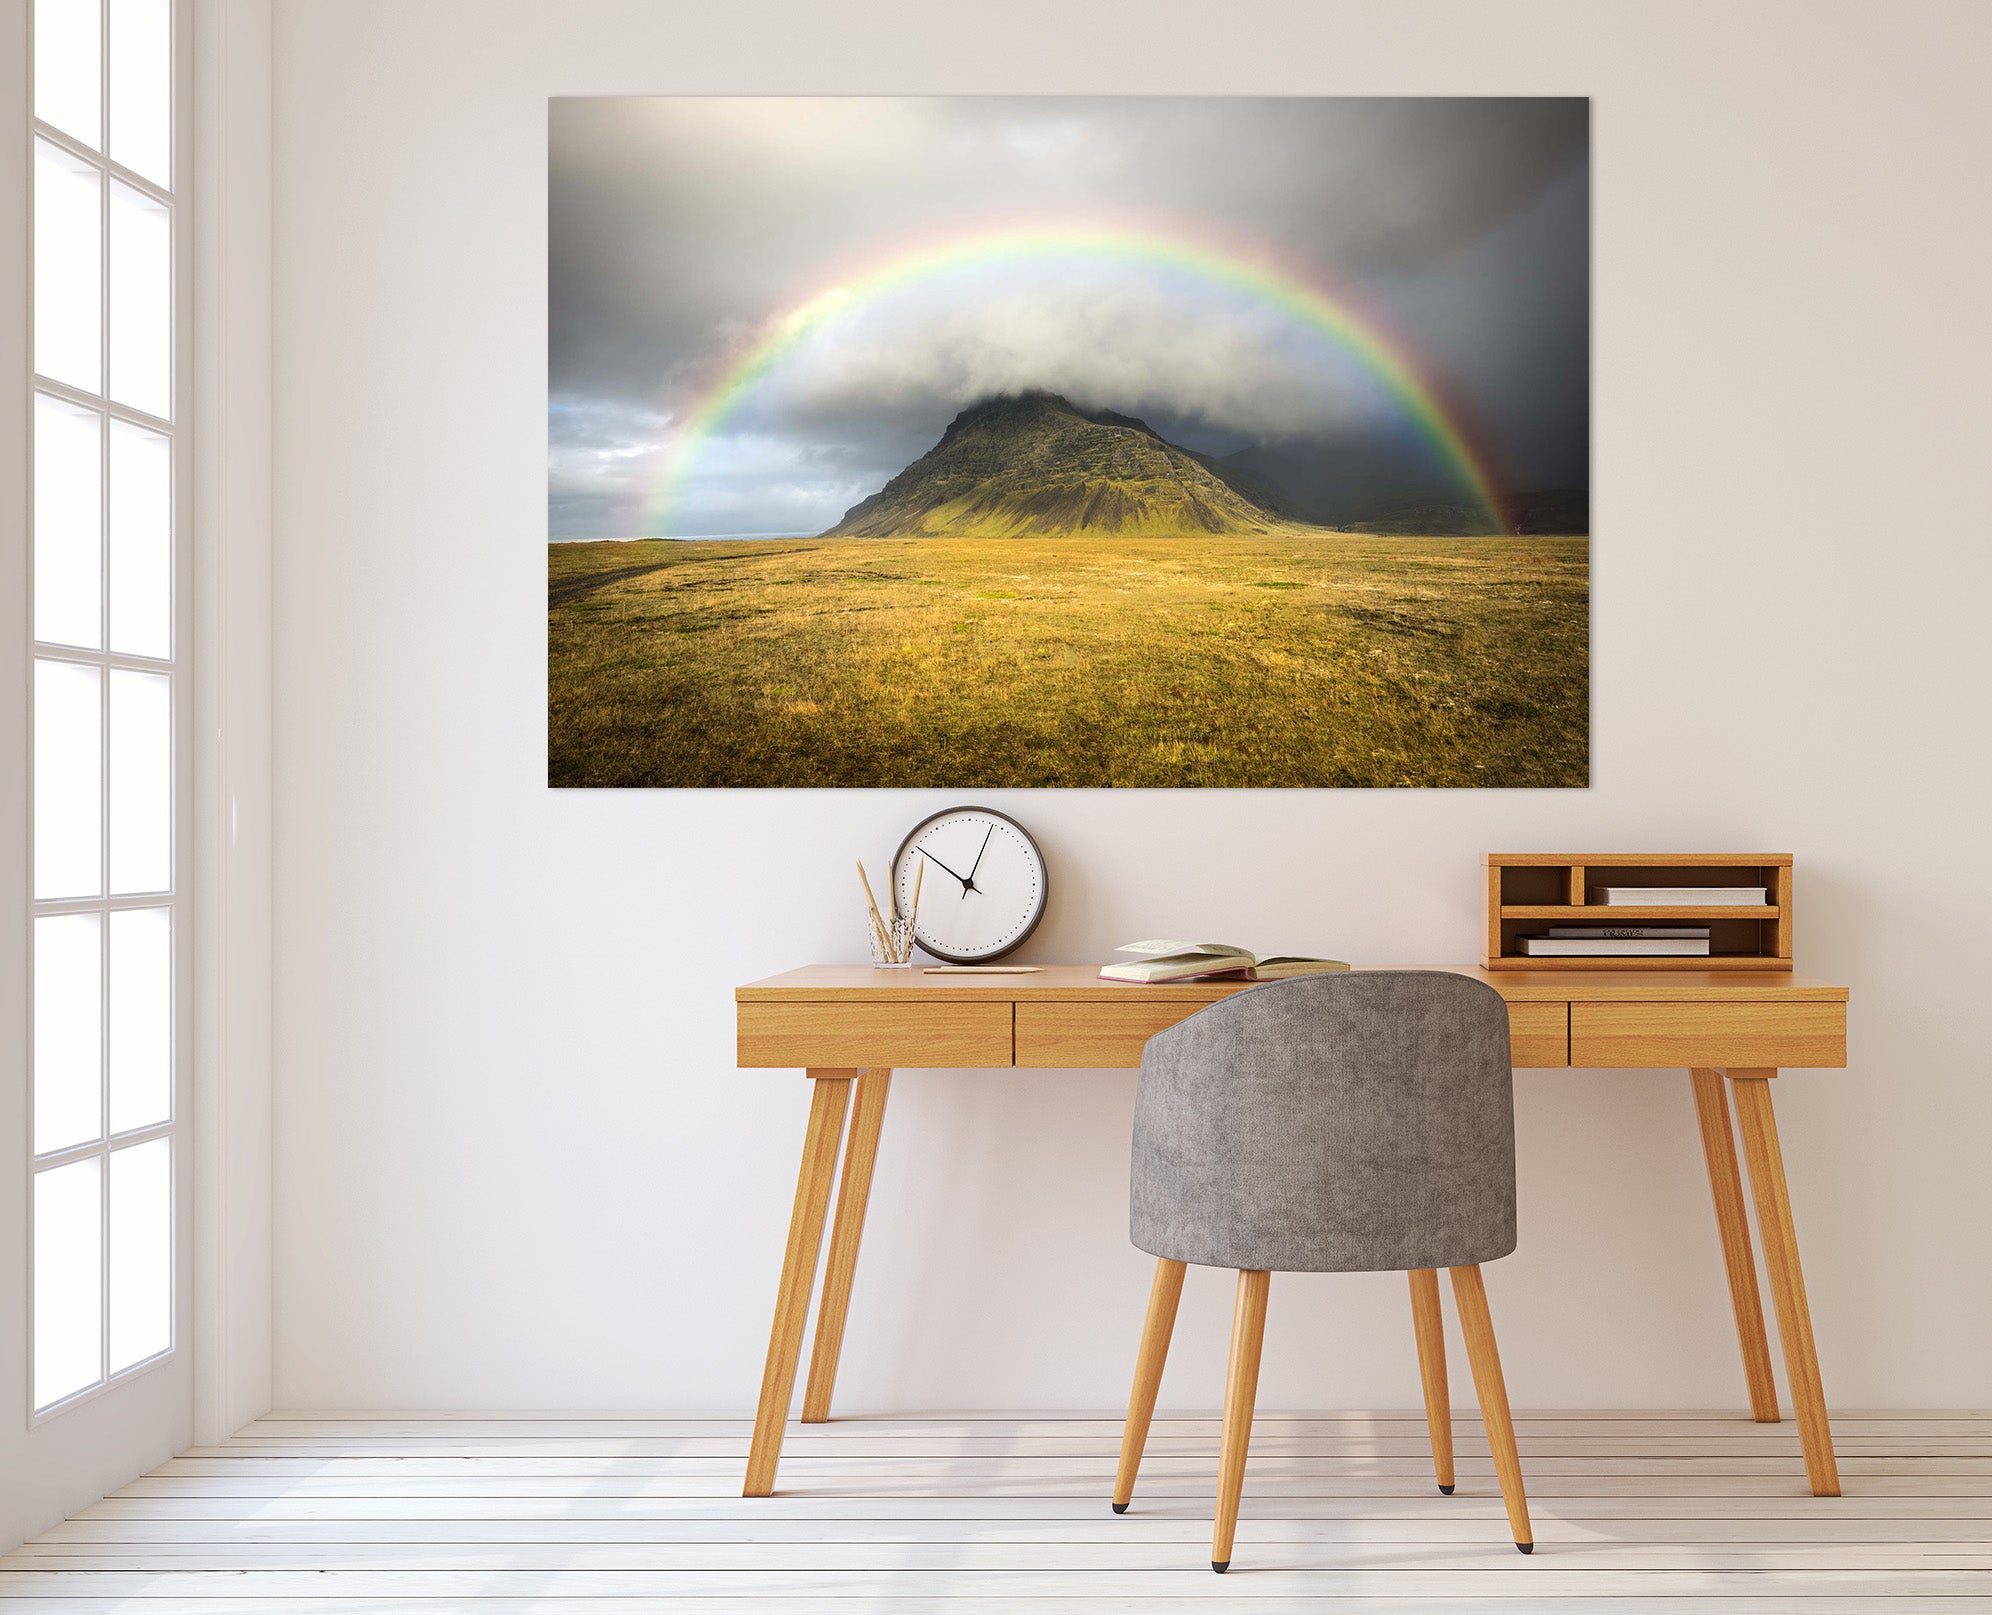 3D Rainbow Prairie 158 Marco Carmassi Wall Sticker